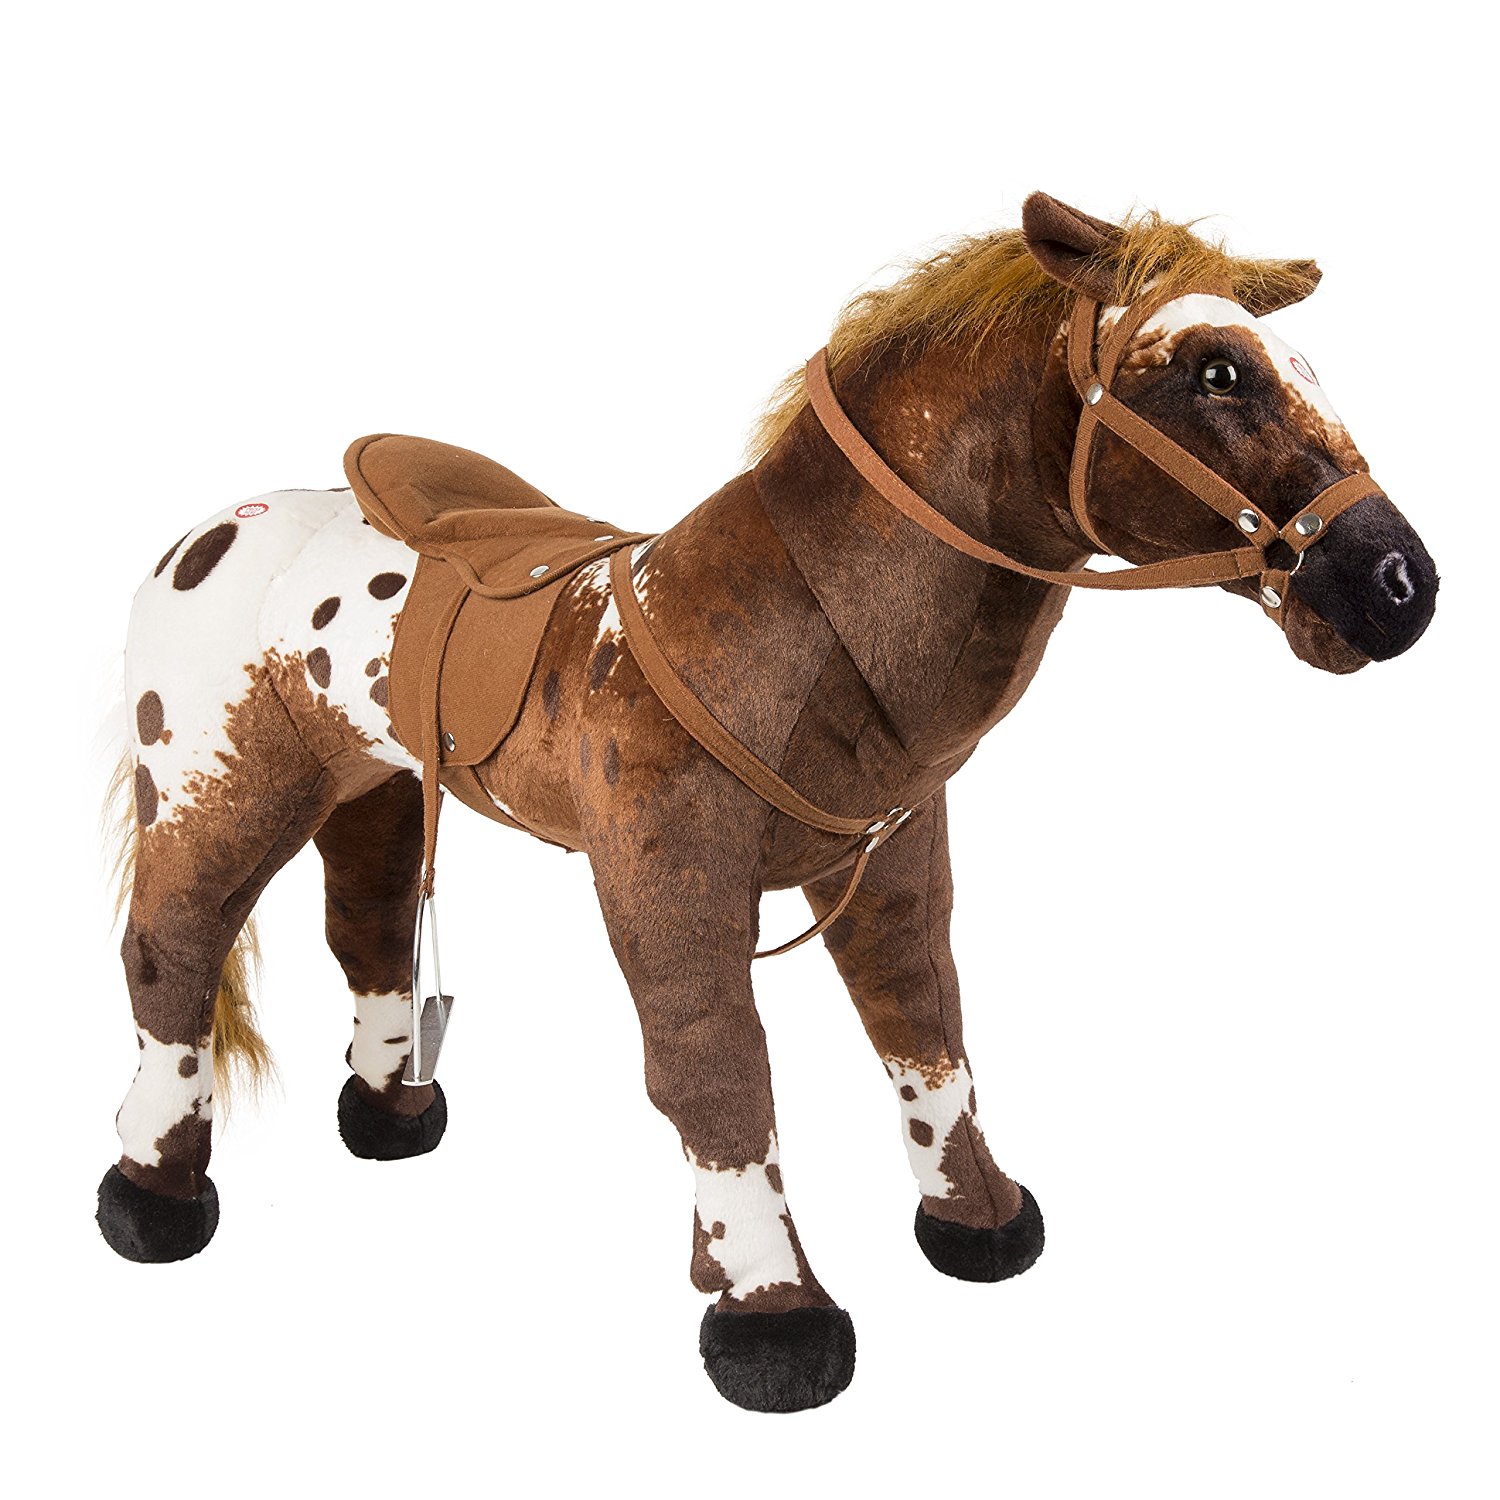 Amazon.com: Rockin' Rider Domino Stable Horse: Toys & Games